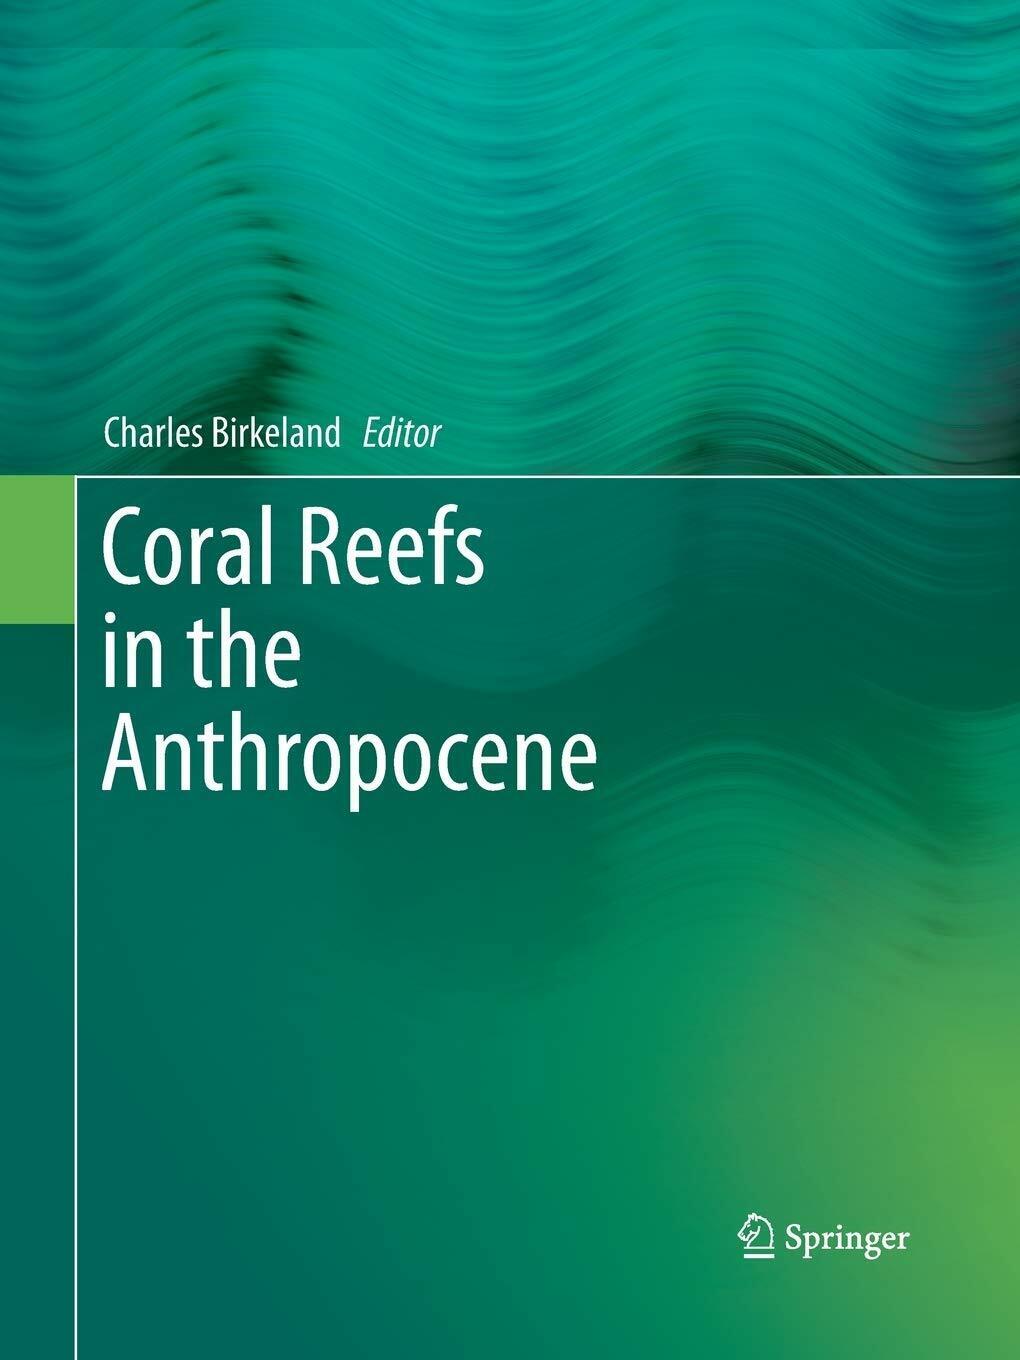 Coral Reefs in the Anthropocene - Charles Birkeland - Springer, 2016 libro usato